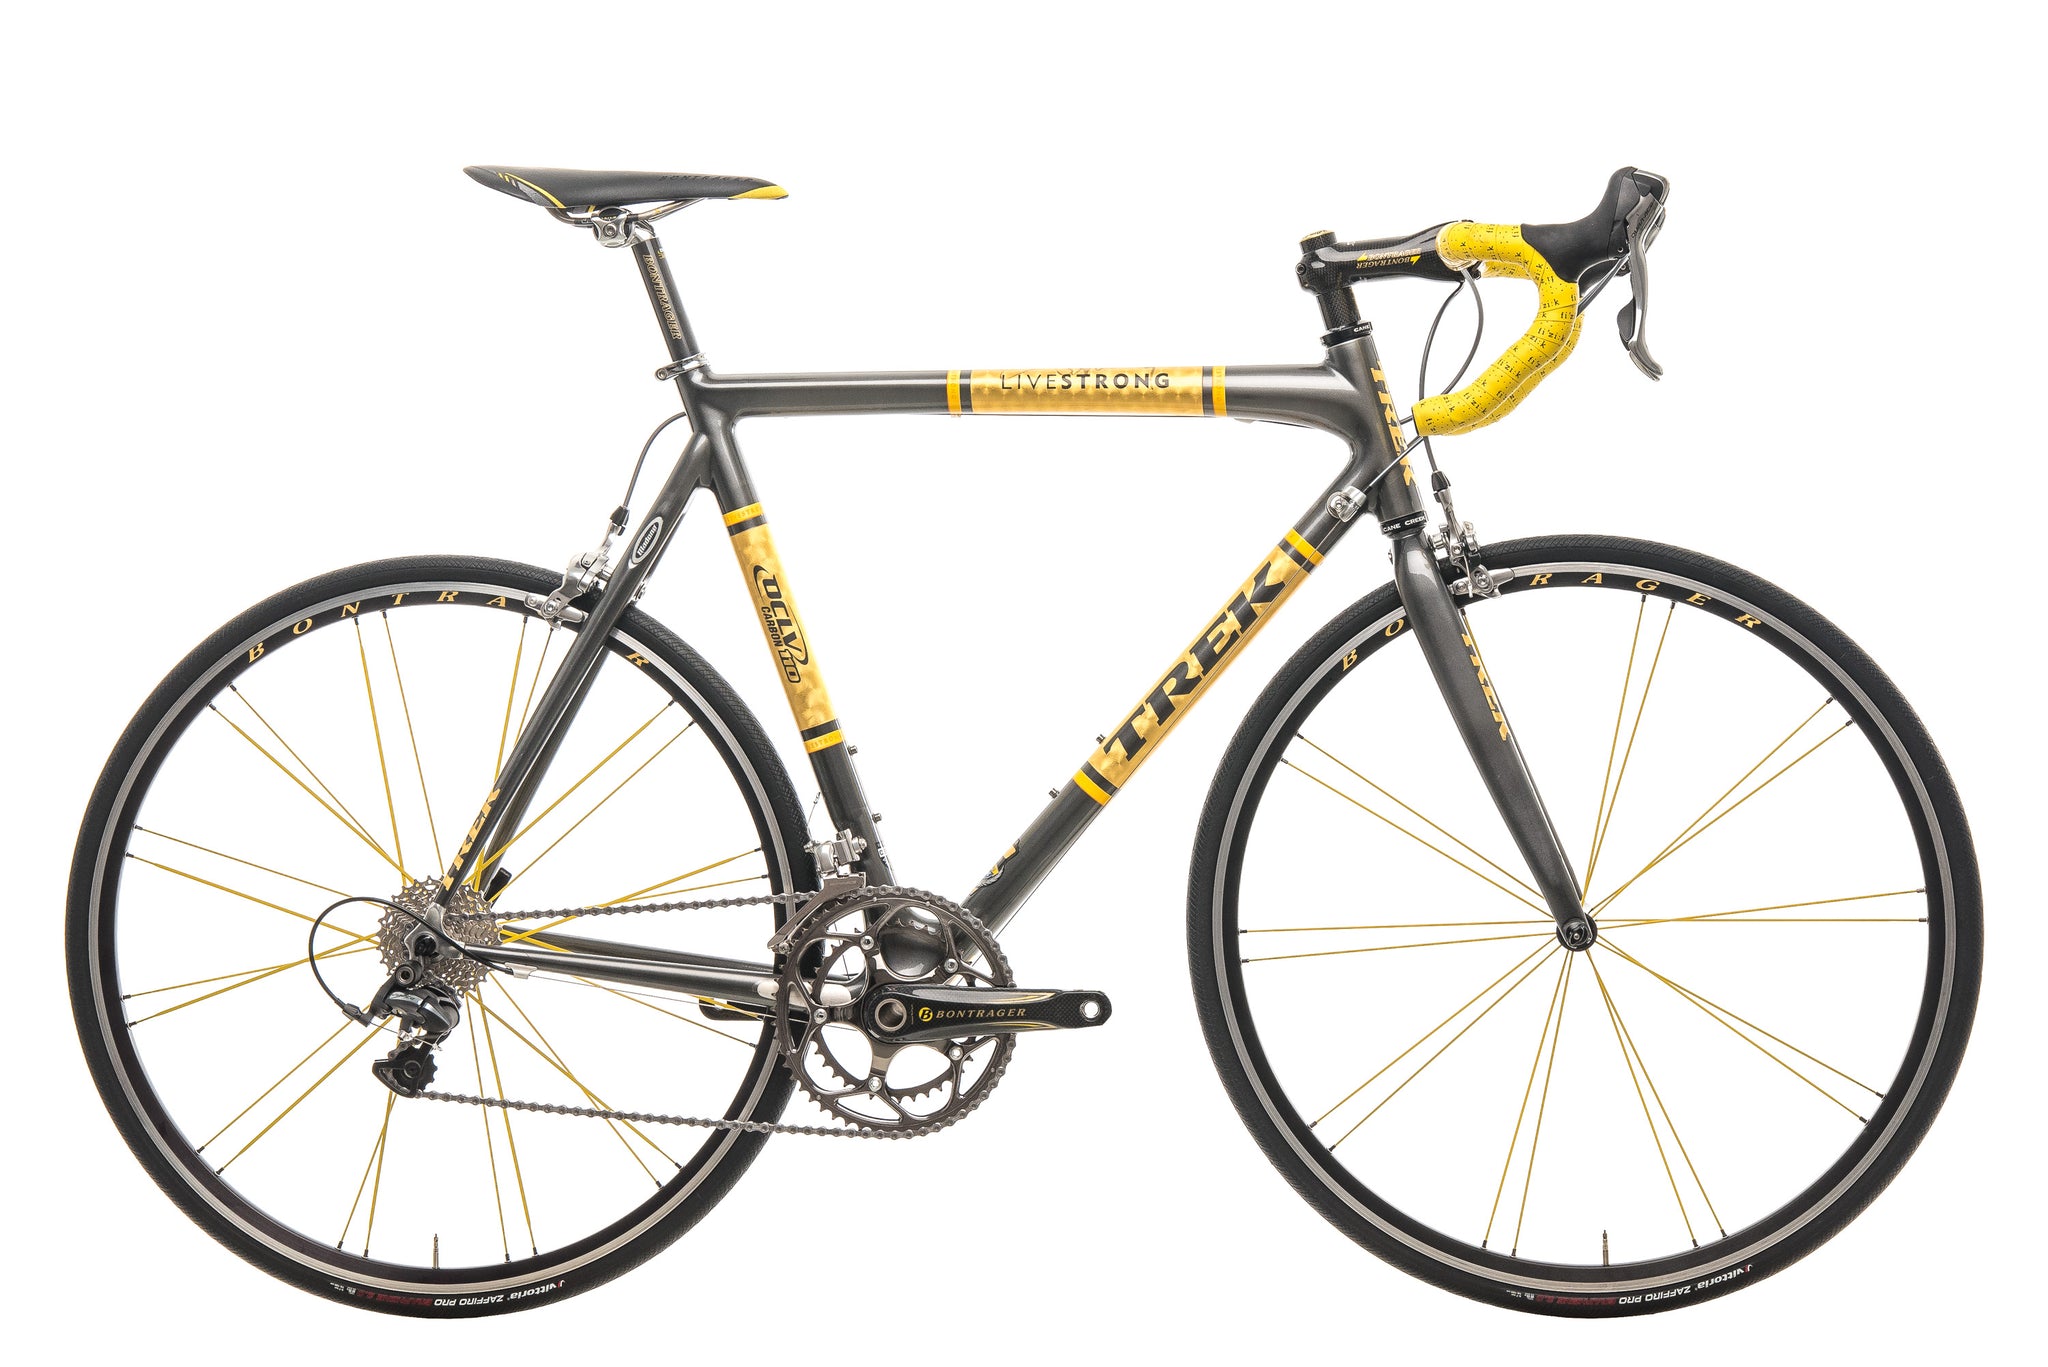 Trek 5500 carbon road bike of Lance Armstrong